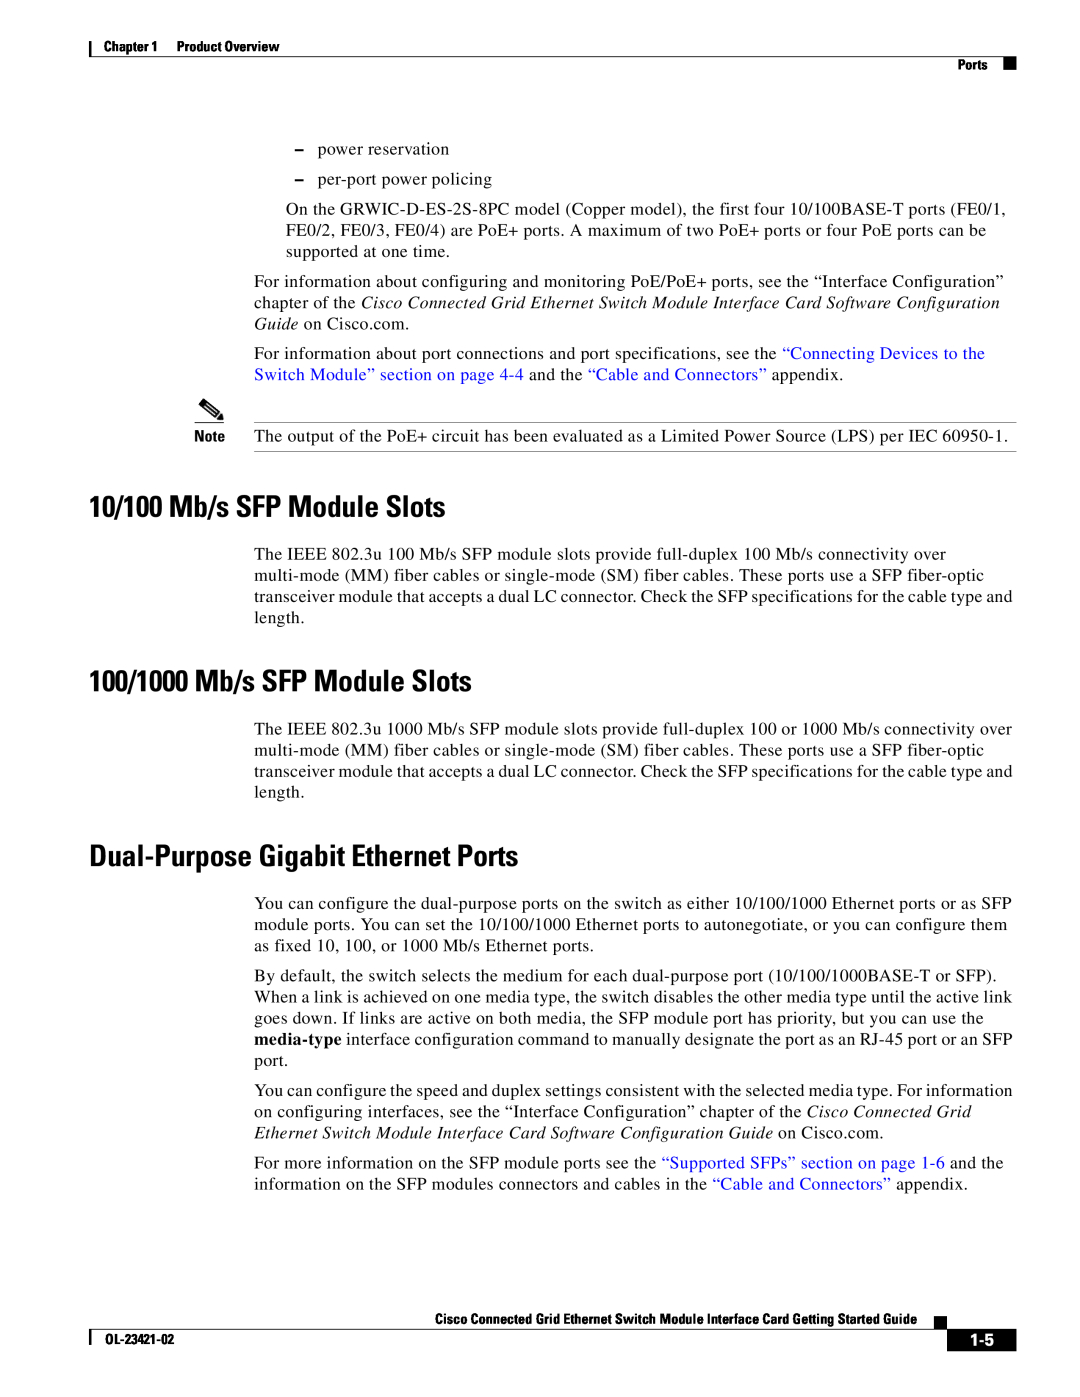 Cisco Systems OL-23421-02 manual 10/100 Mb/s SFP Module Slots, 100/1000 Mb/s SFP Module Slots 